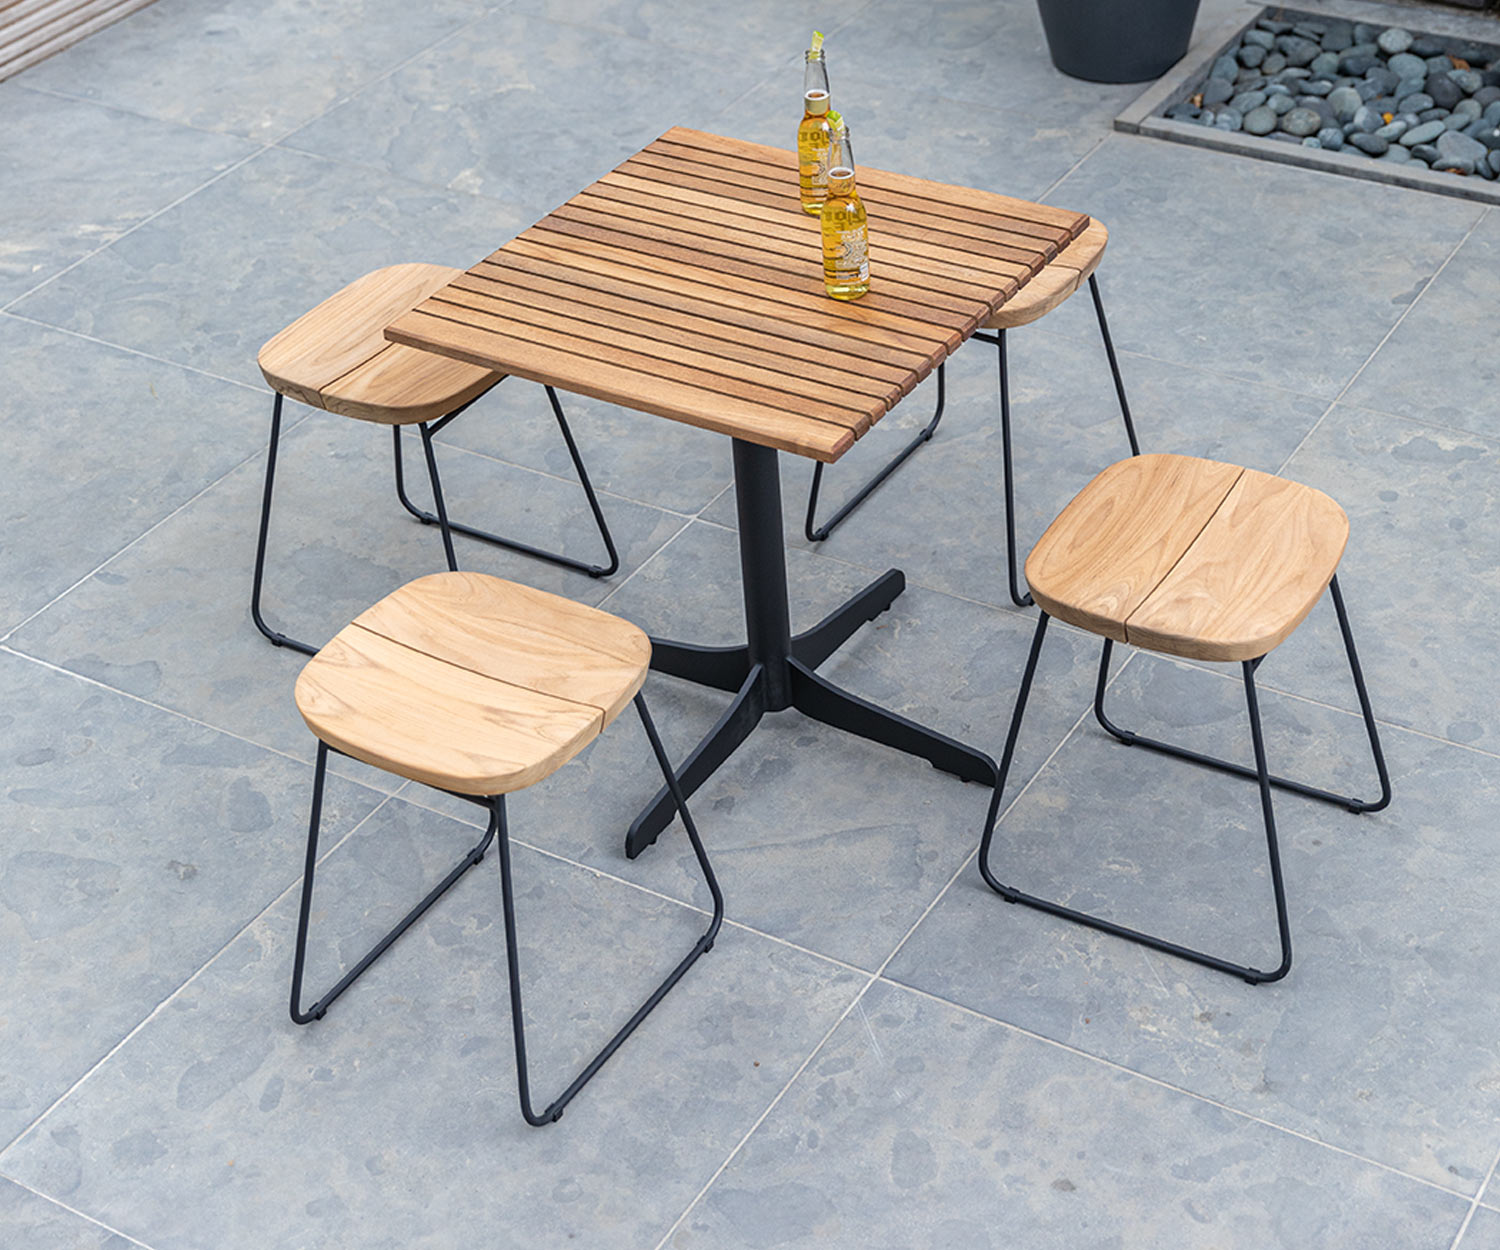 Weatherproof Oasiq Bryggen design bar stool with garden table on balcony